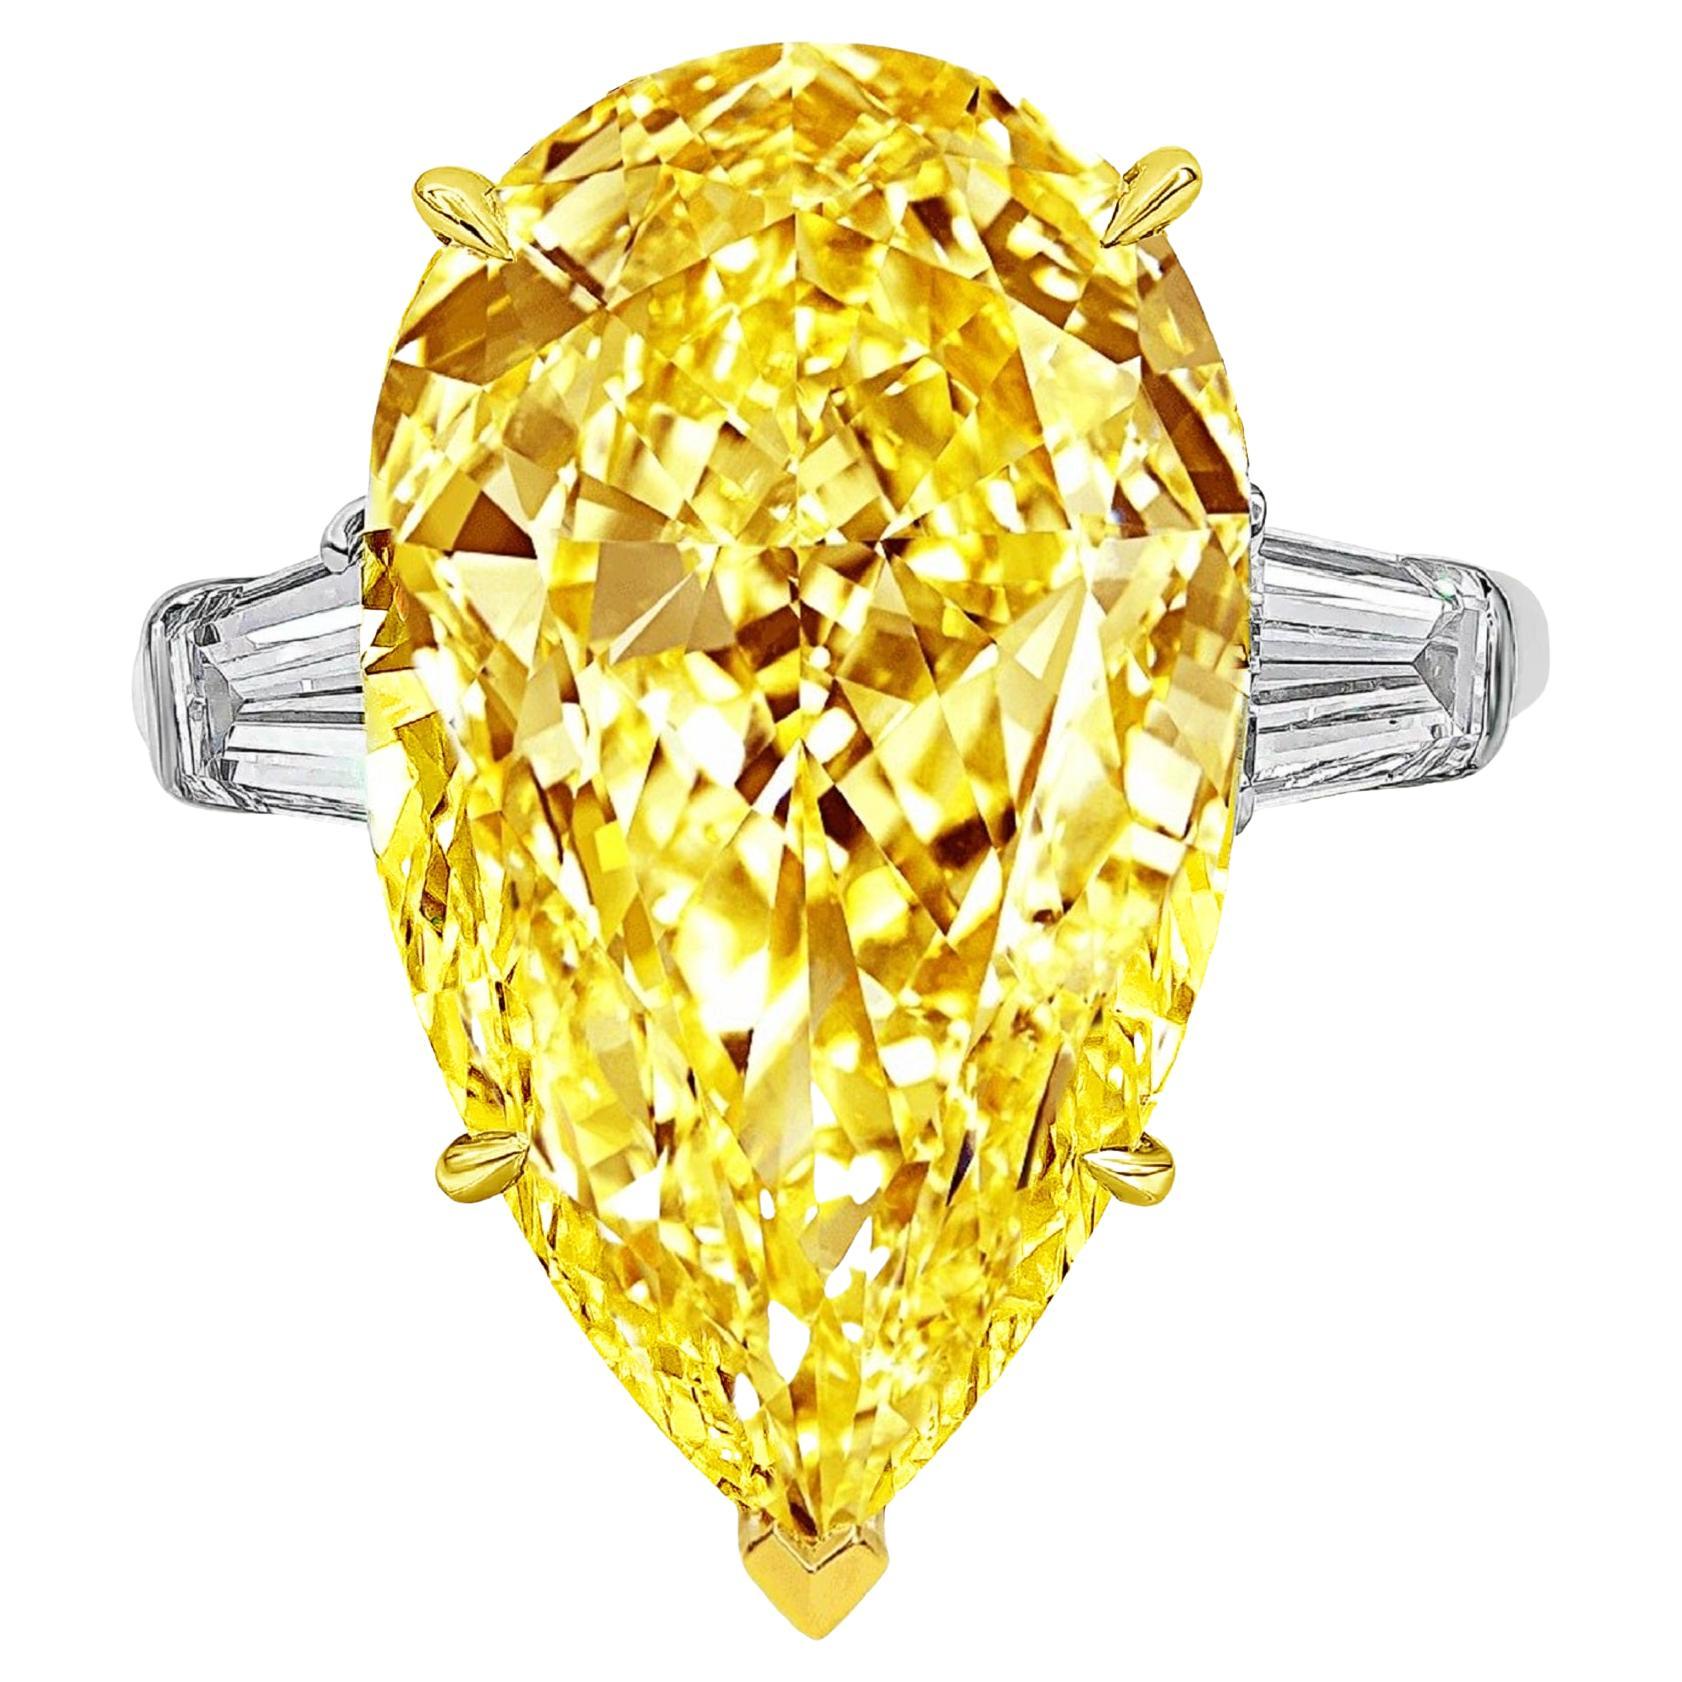 GIA Certified Fancy Intense Yellow 13.8 Carat Pear Cut Diamond Ring